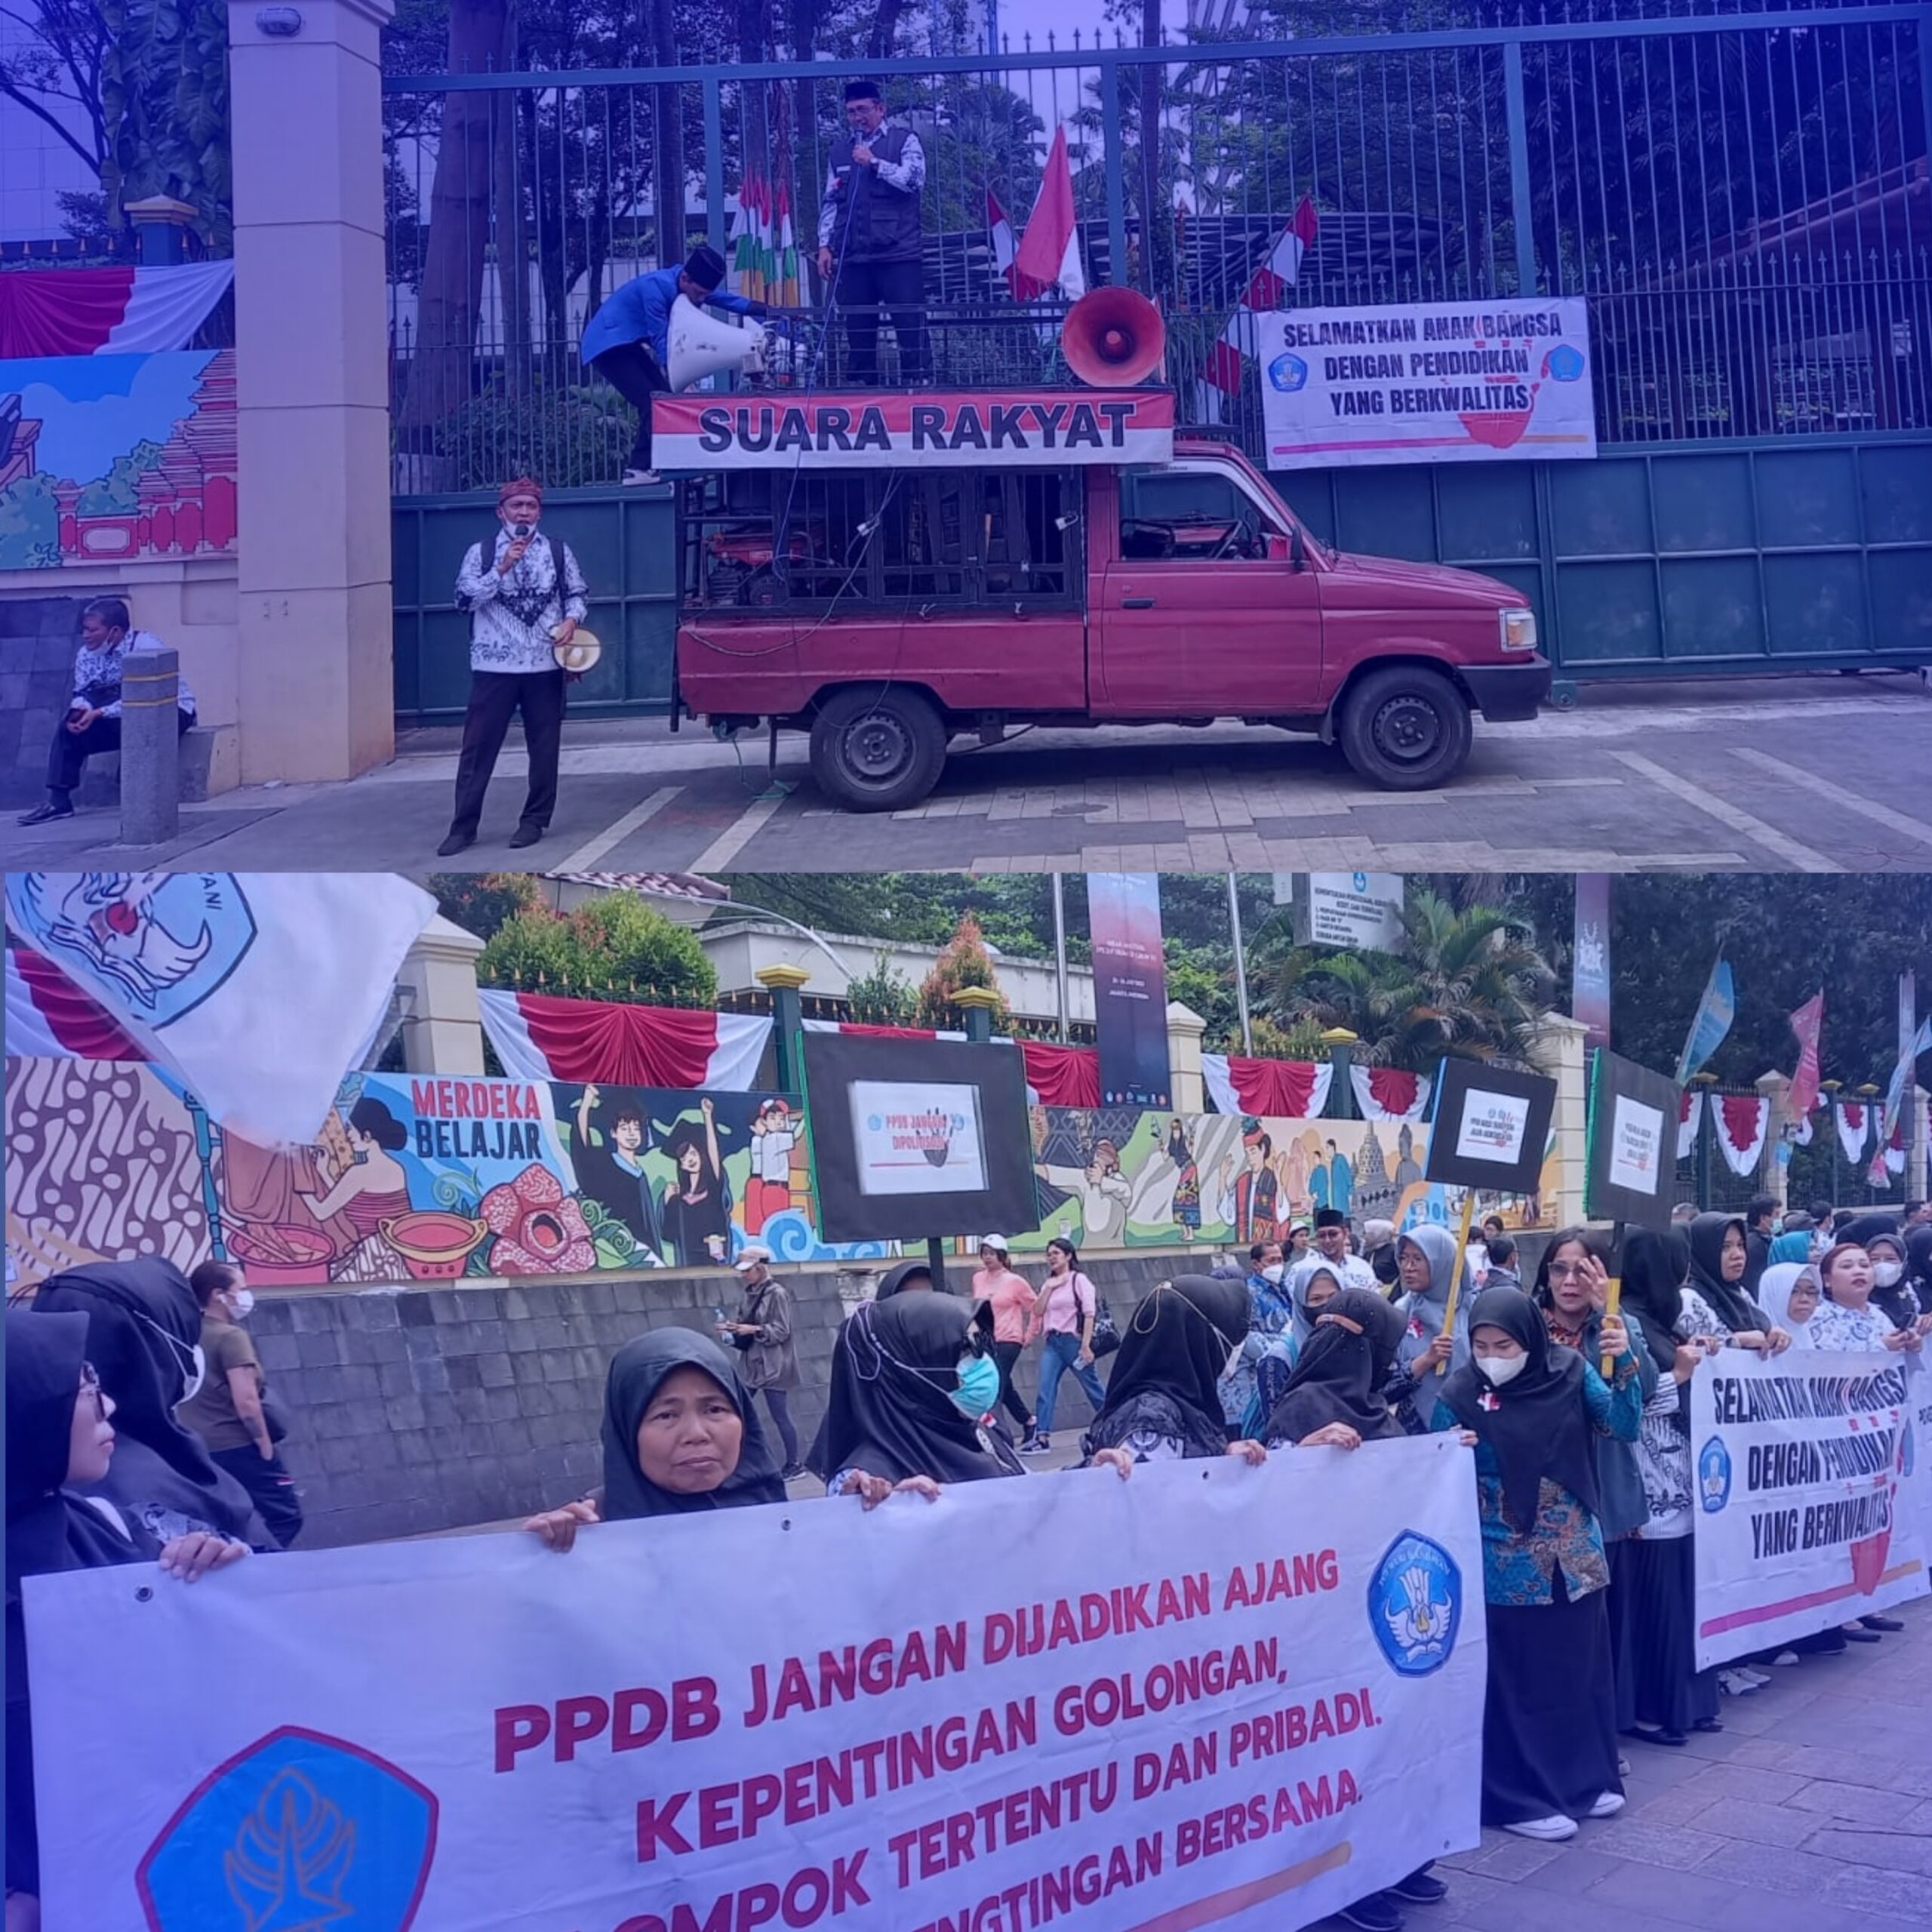 Badan Musyawarah Perguruan Swasta (BMPS) Kota Bekasi Jawa Barat telah melakukan unjuk rasa di kantor Kementerian Pendidikan, Kebudayaan, Riset, dan Teknologi